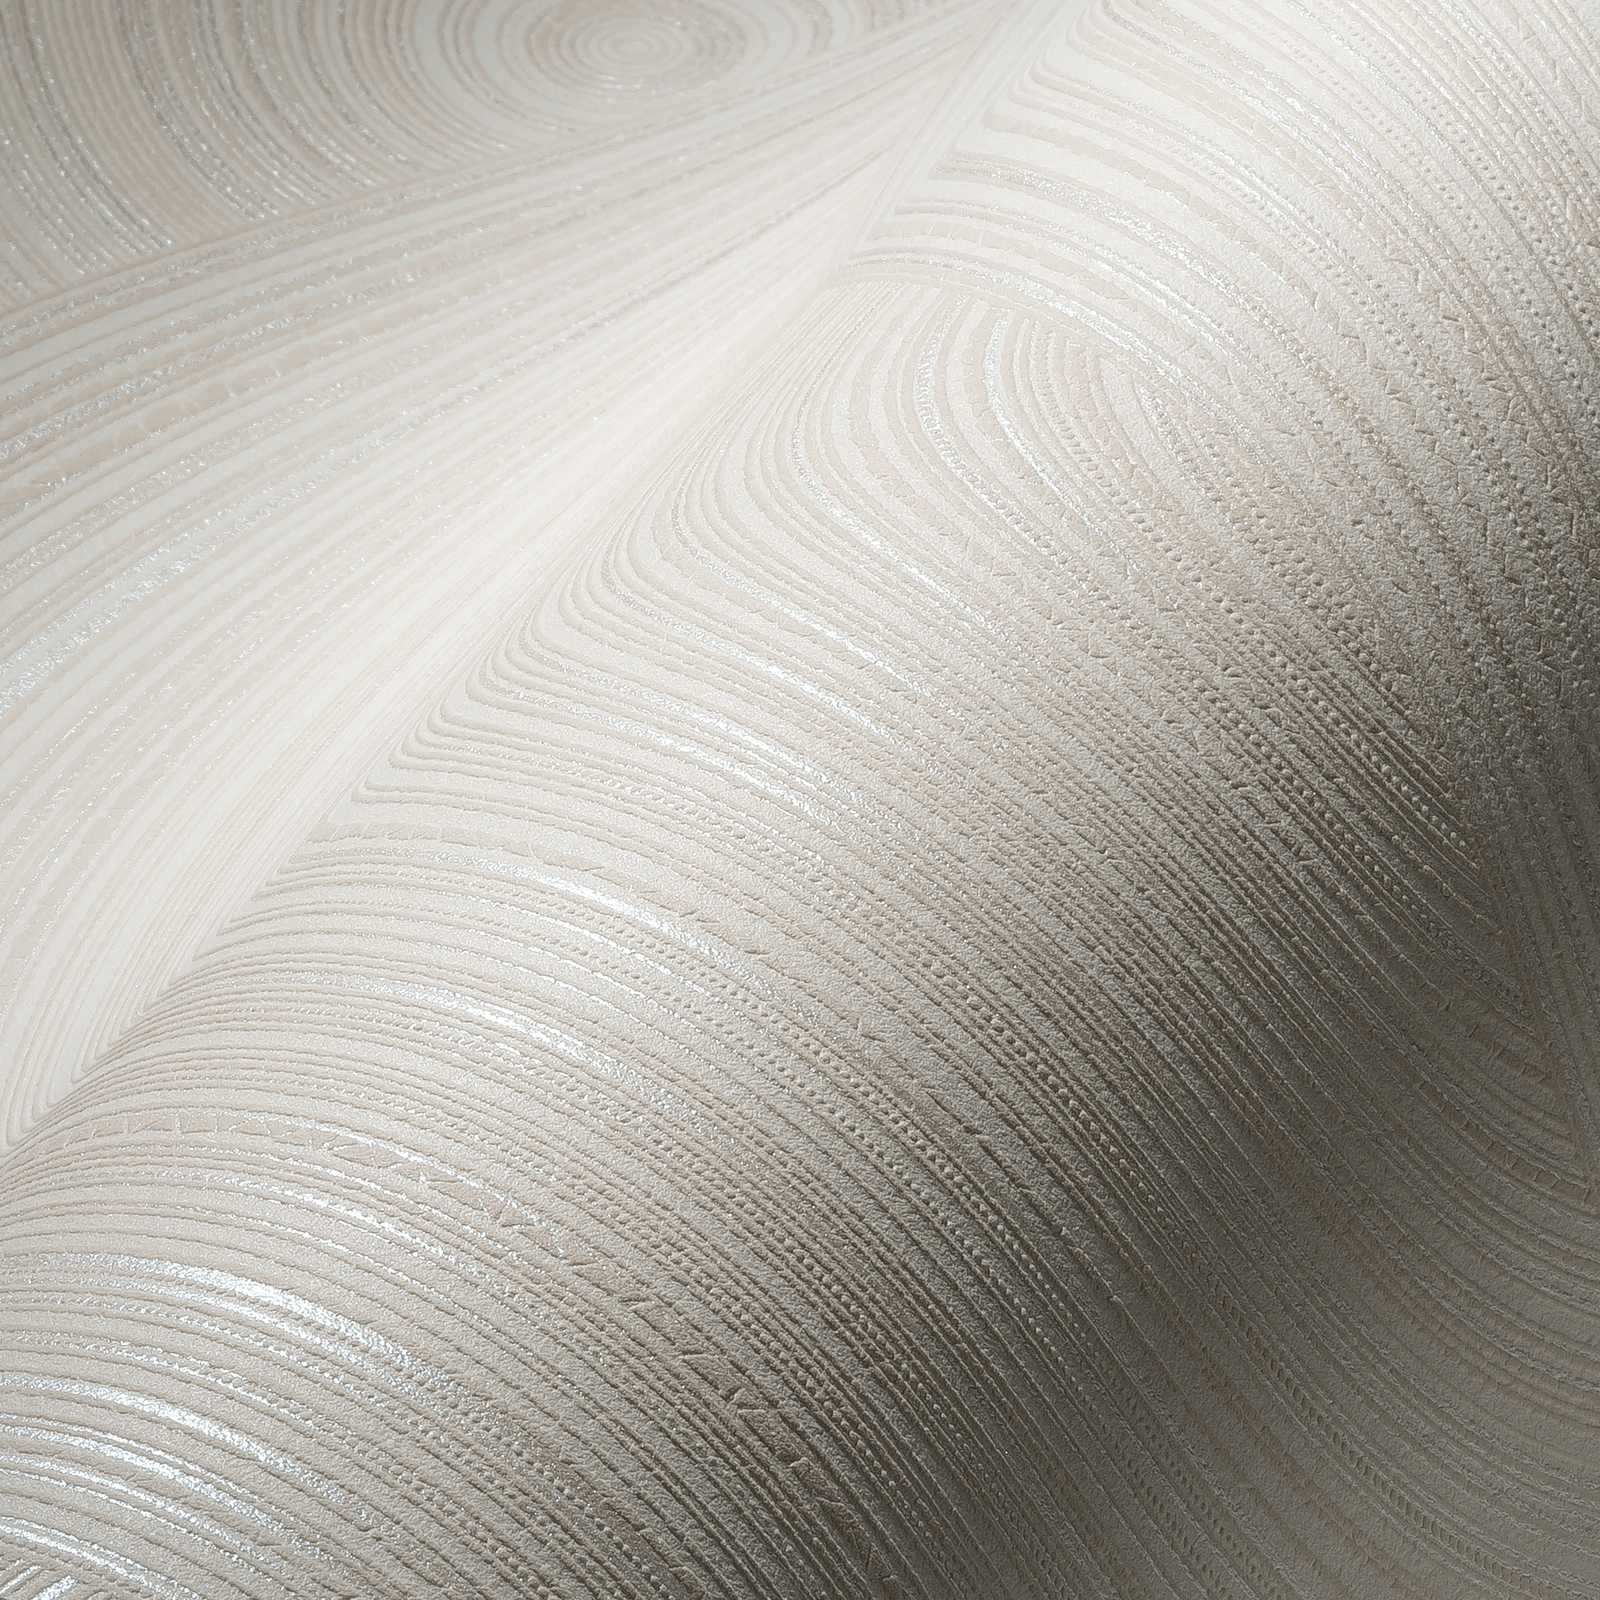             vliesbehang cirkelpatroon met structuuroppervlak - crème, beige
        